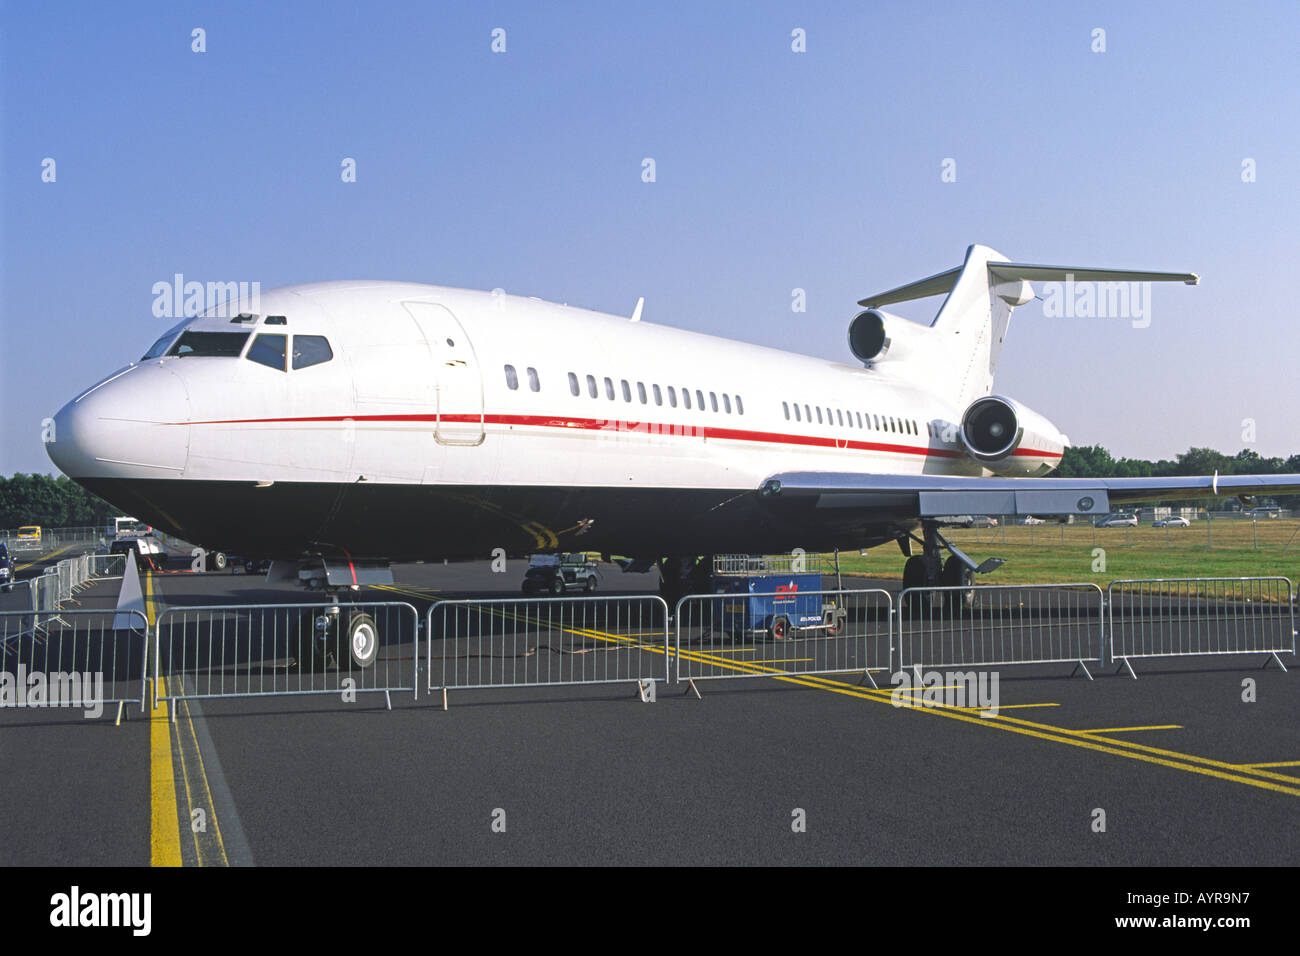 Boeing 727 on display at Farnborough International Airshow, UK. Stock Photo